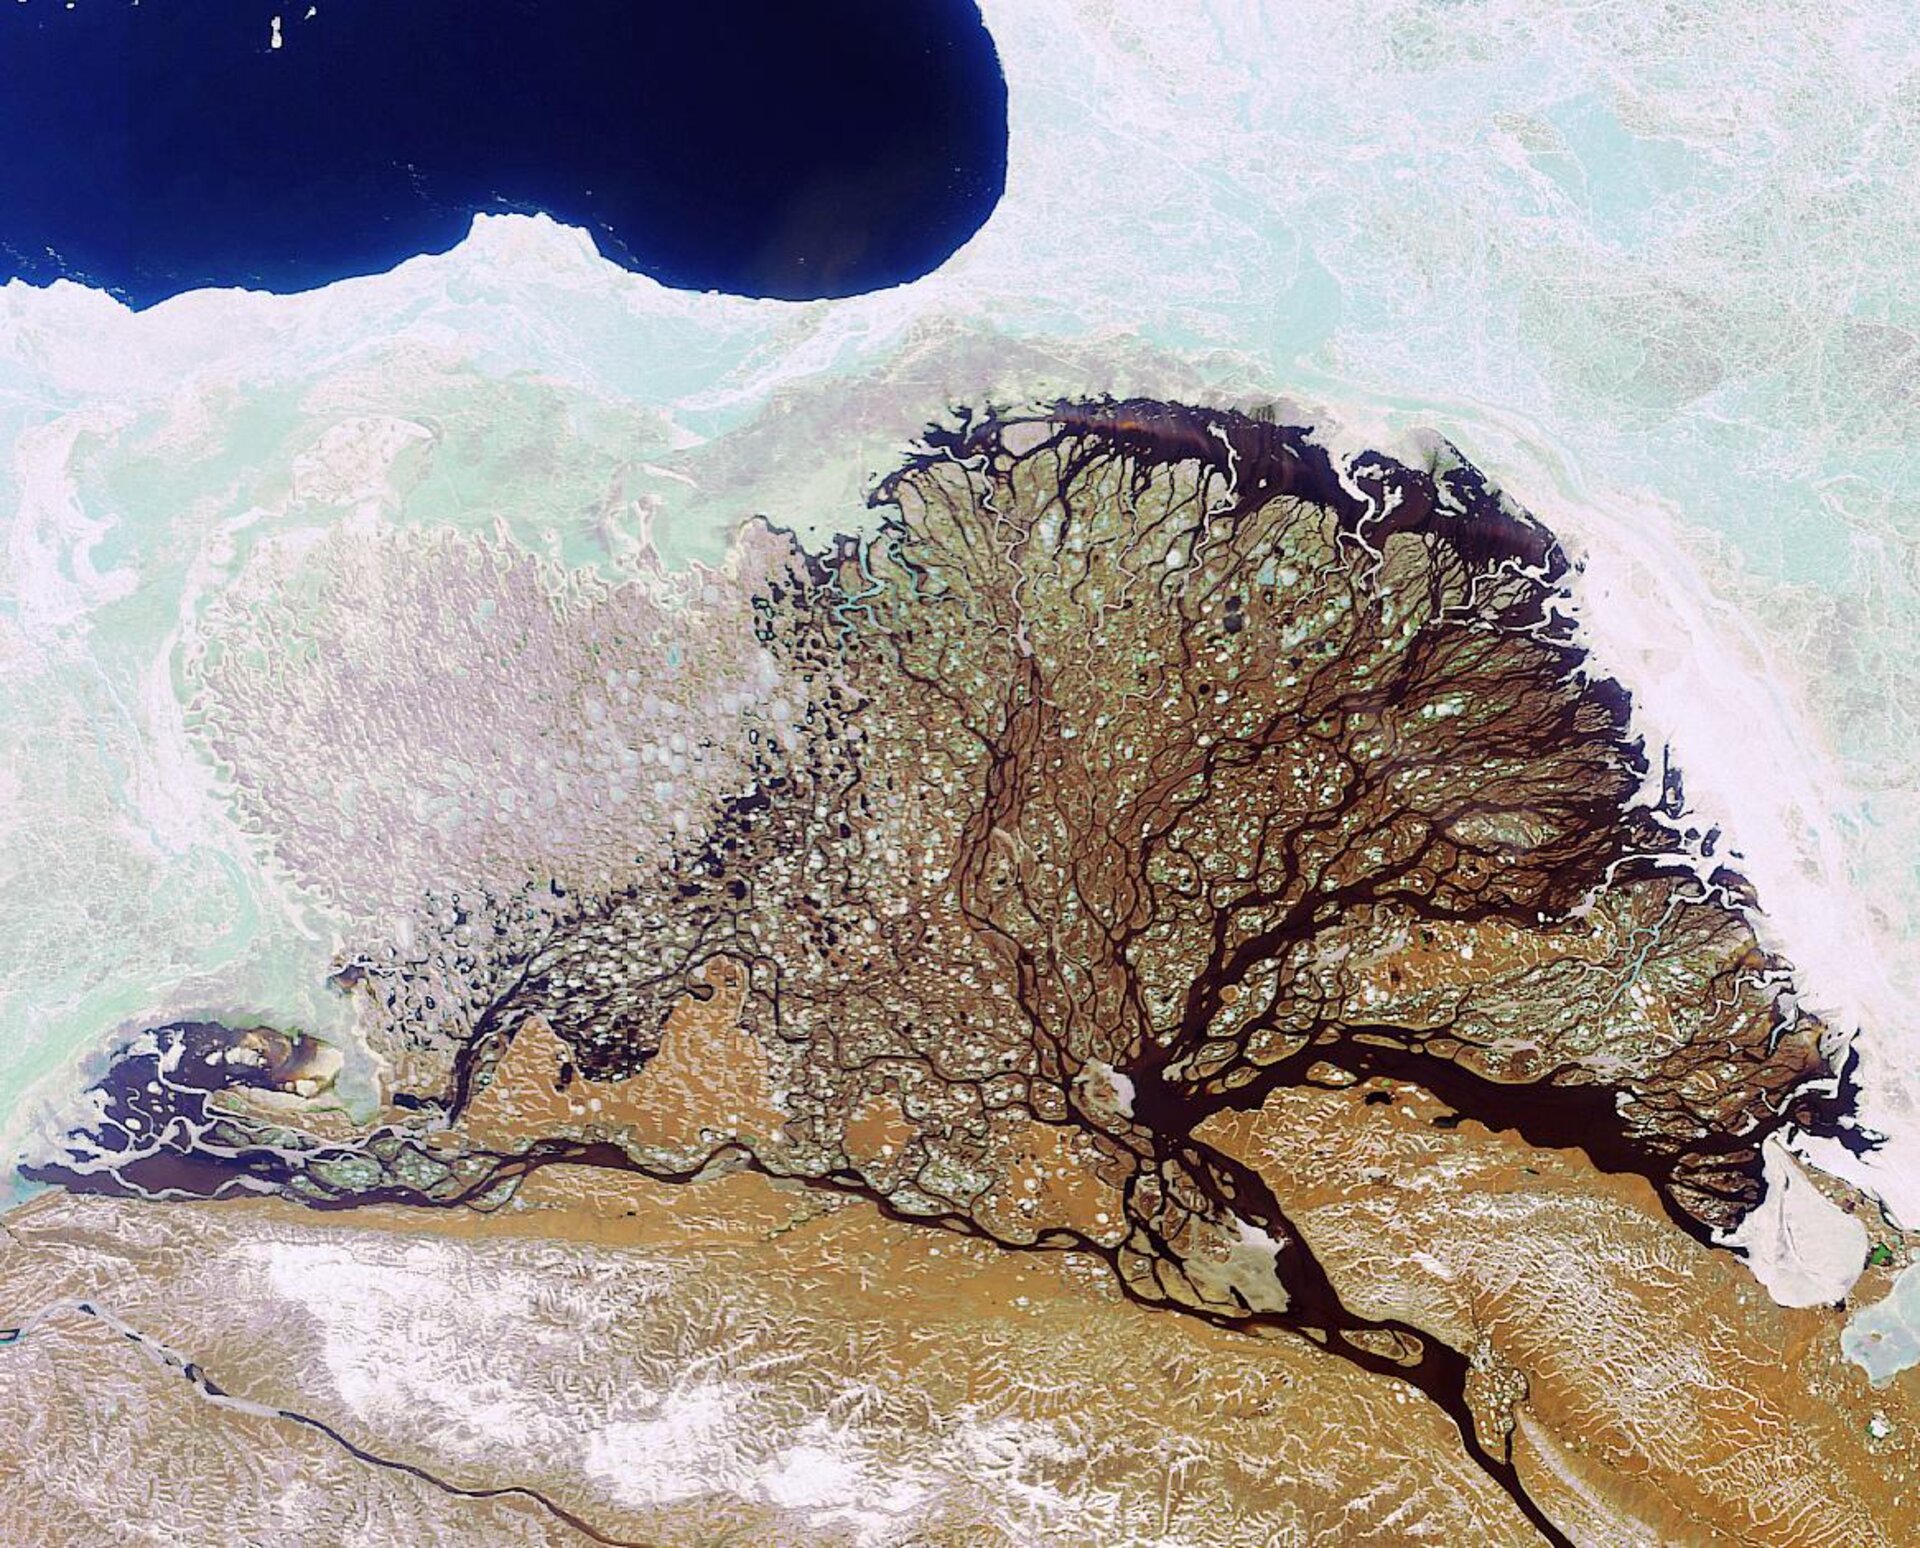 Russia's Lena River Delta as seen by Envisat